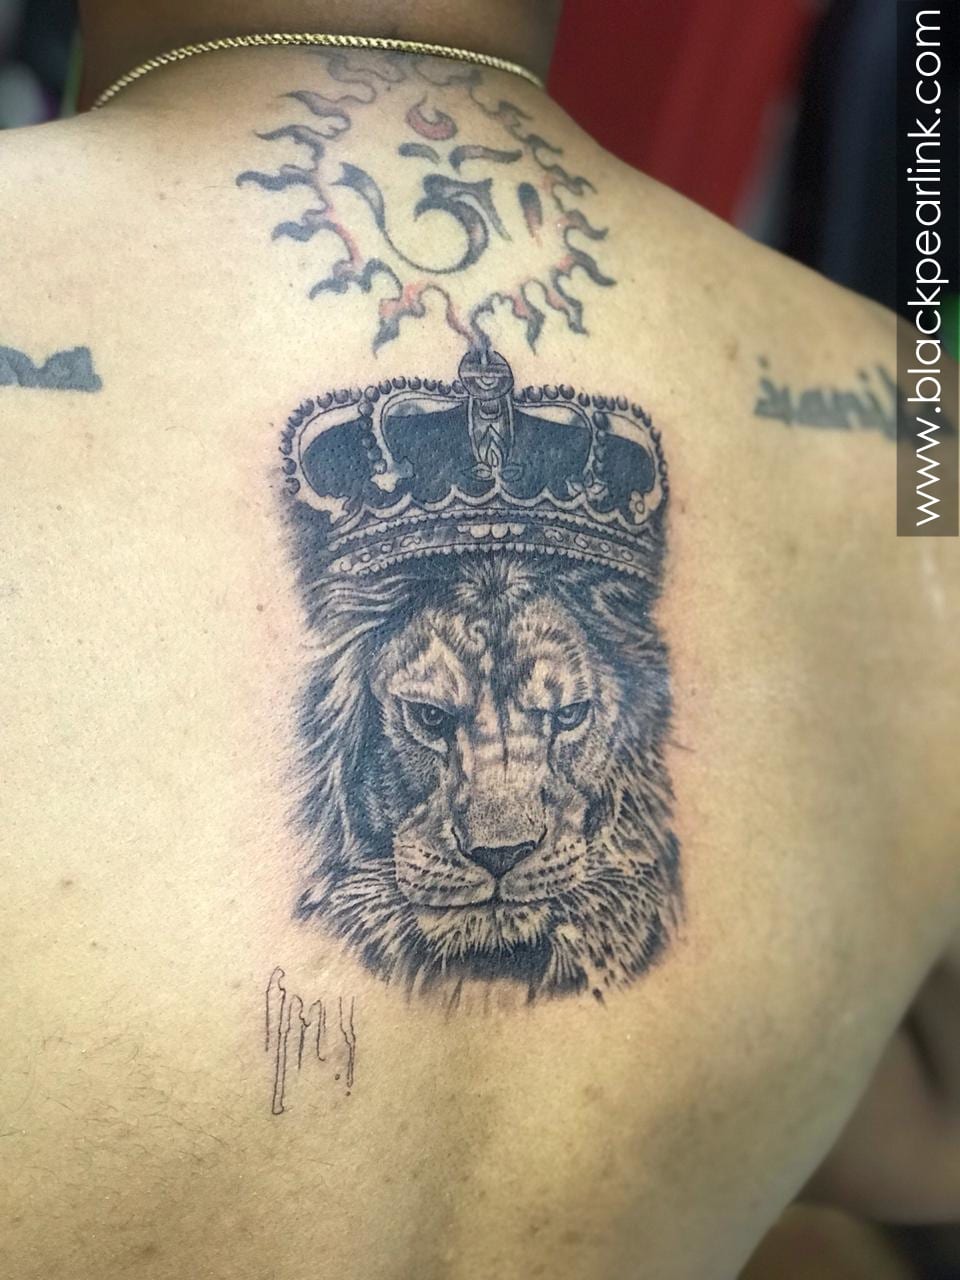 Tattoo uploaded by Tattoodo • Tattoo by Robert Pavez #RobertPavez  #toptattoosof2018 #toptattoos #2018 #bestof2018 #animal #geometric #lion  #wolf #dotwork #lingwork #illustrative #blackwork #nature • Tattoodo